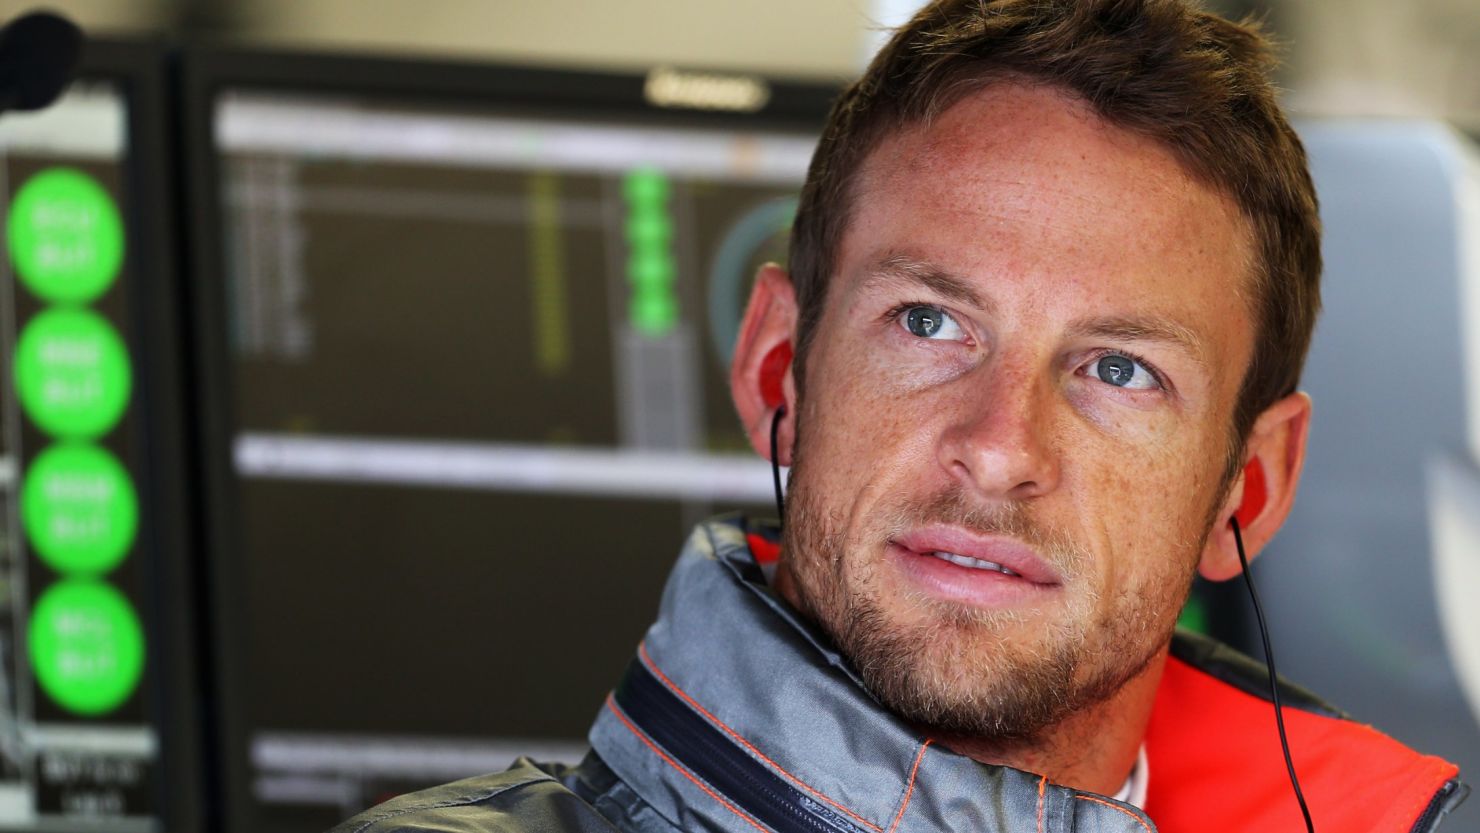 British driver Jenson Button won the 2009 Formula One drivers' title with Brawn GP.